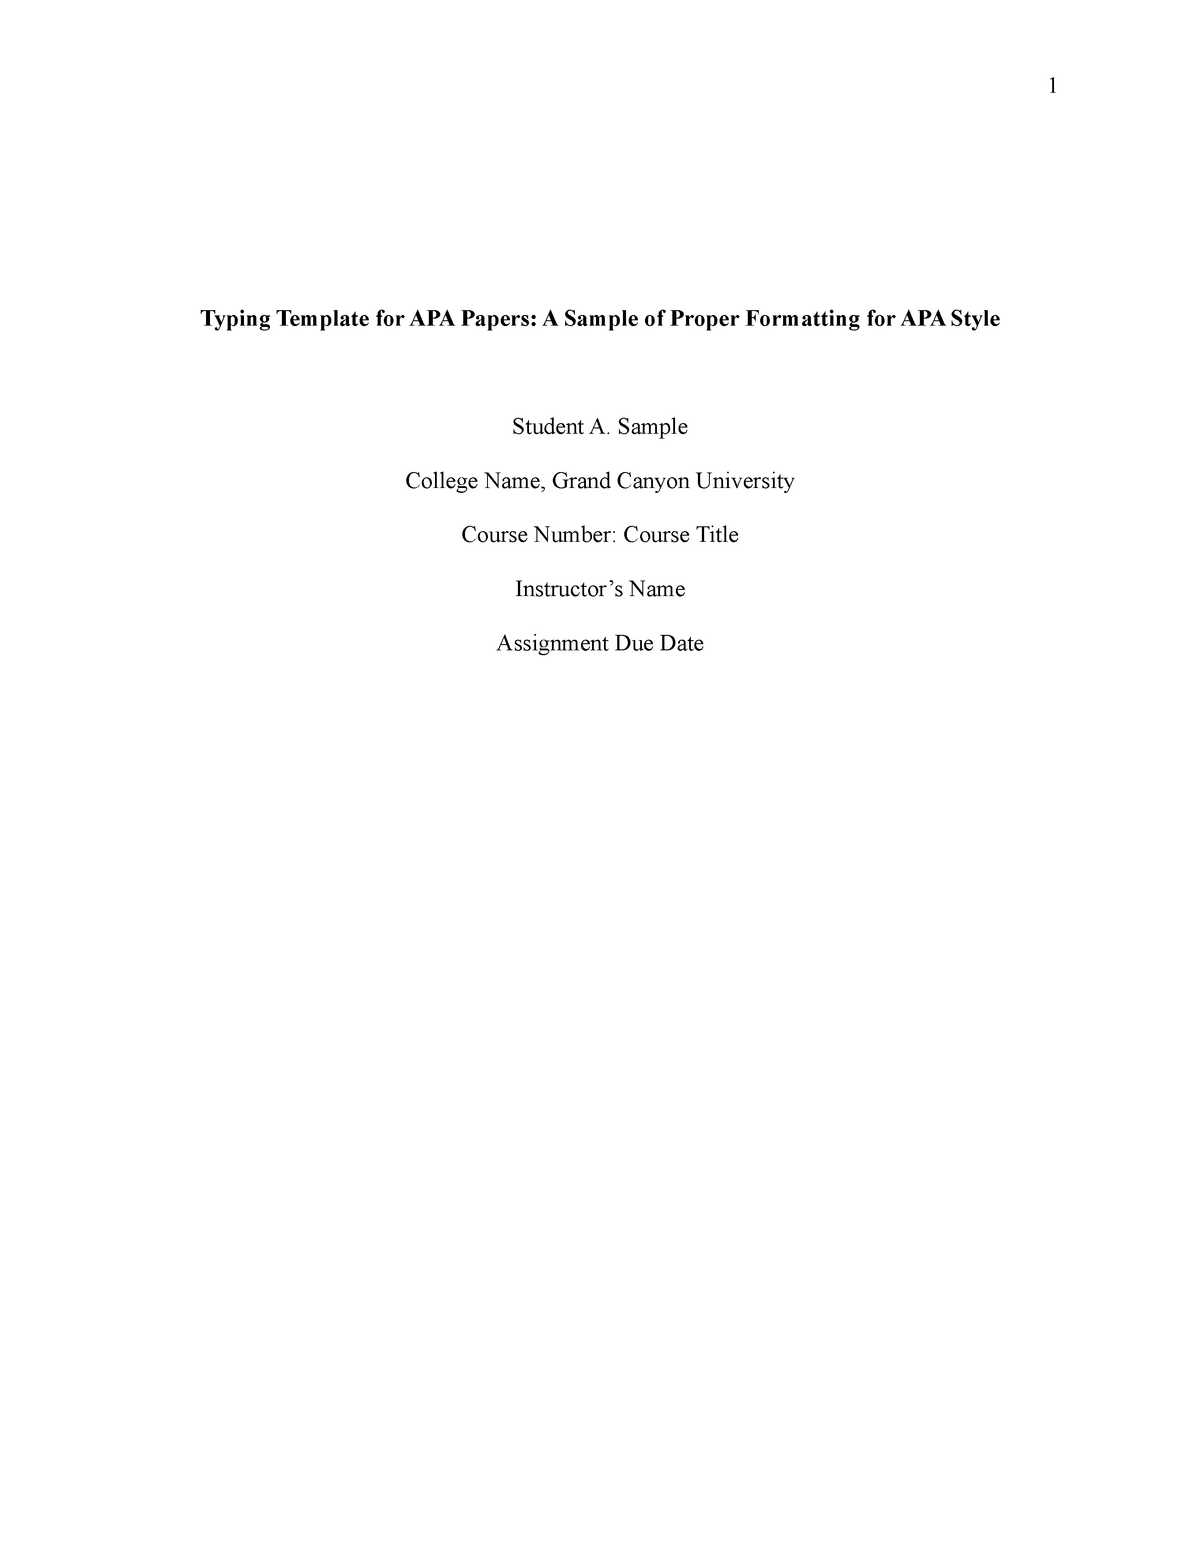 apa format paper no title page